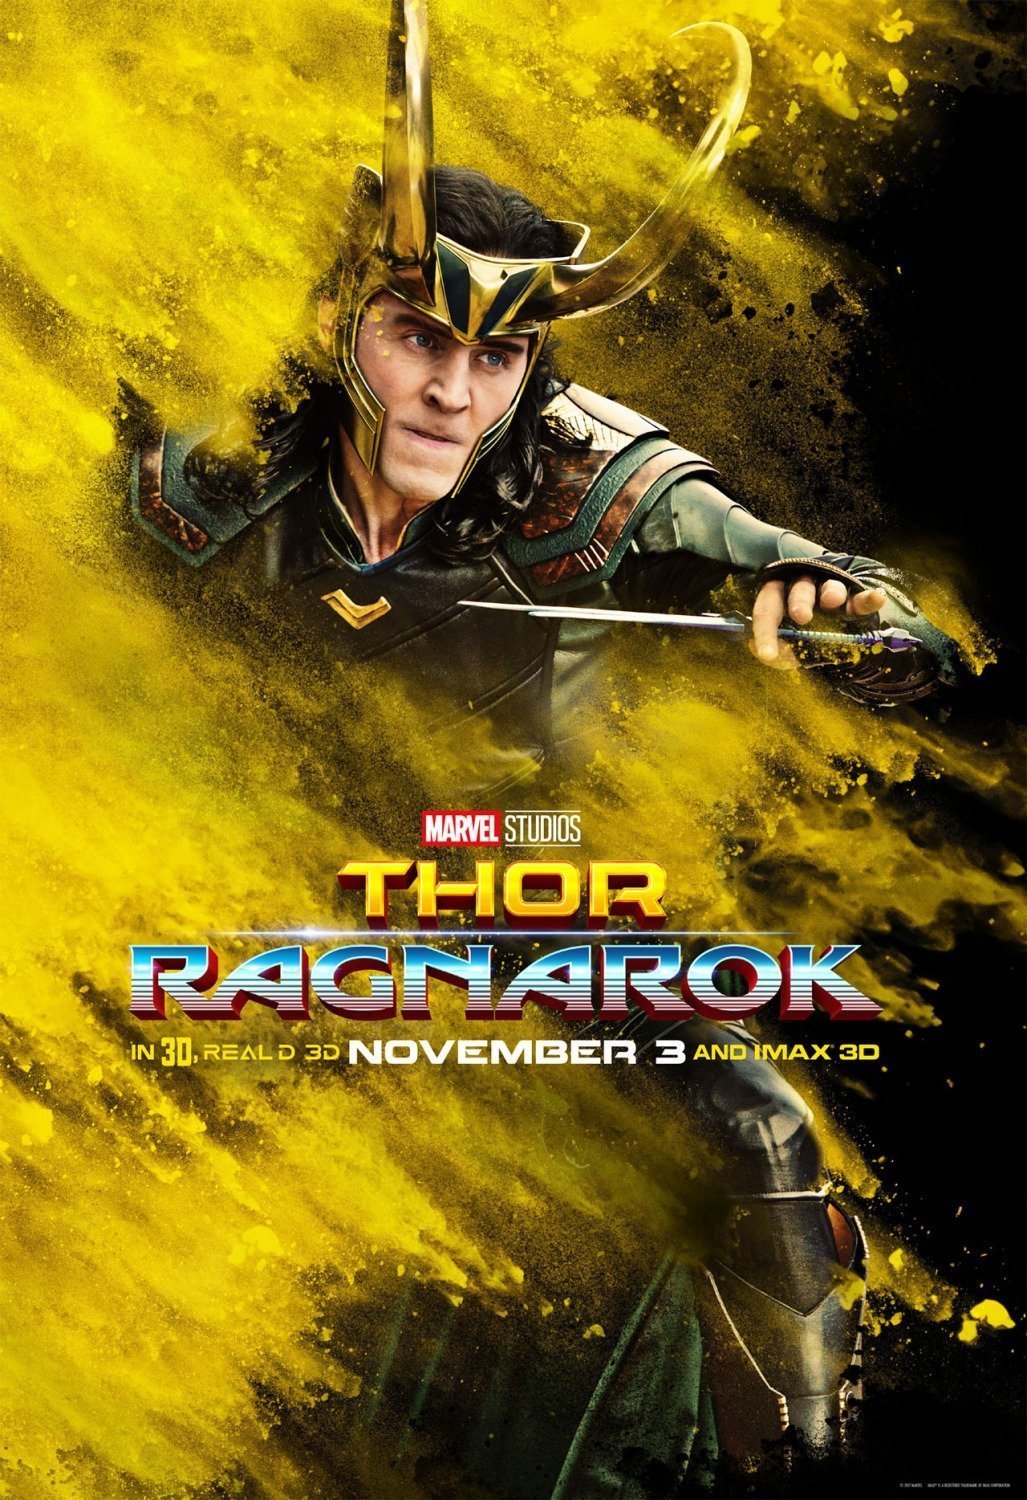 Poster du film Thor: Ragnarok avec Loki